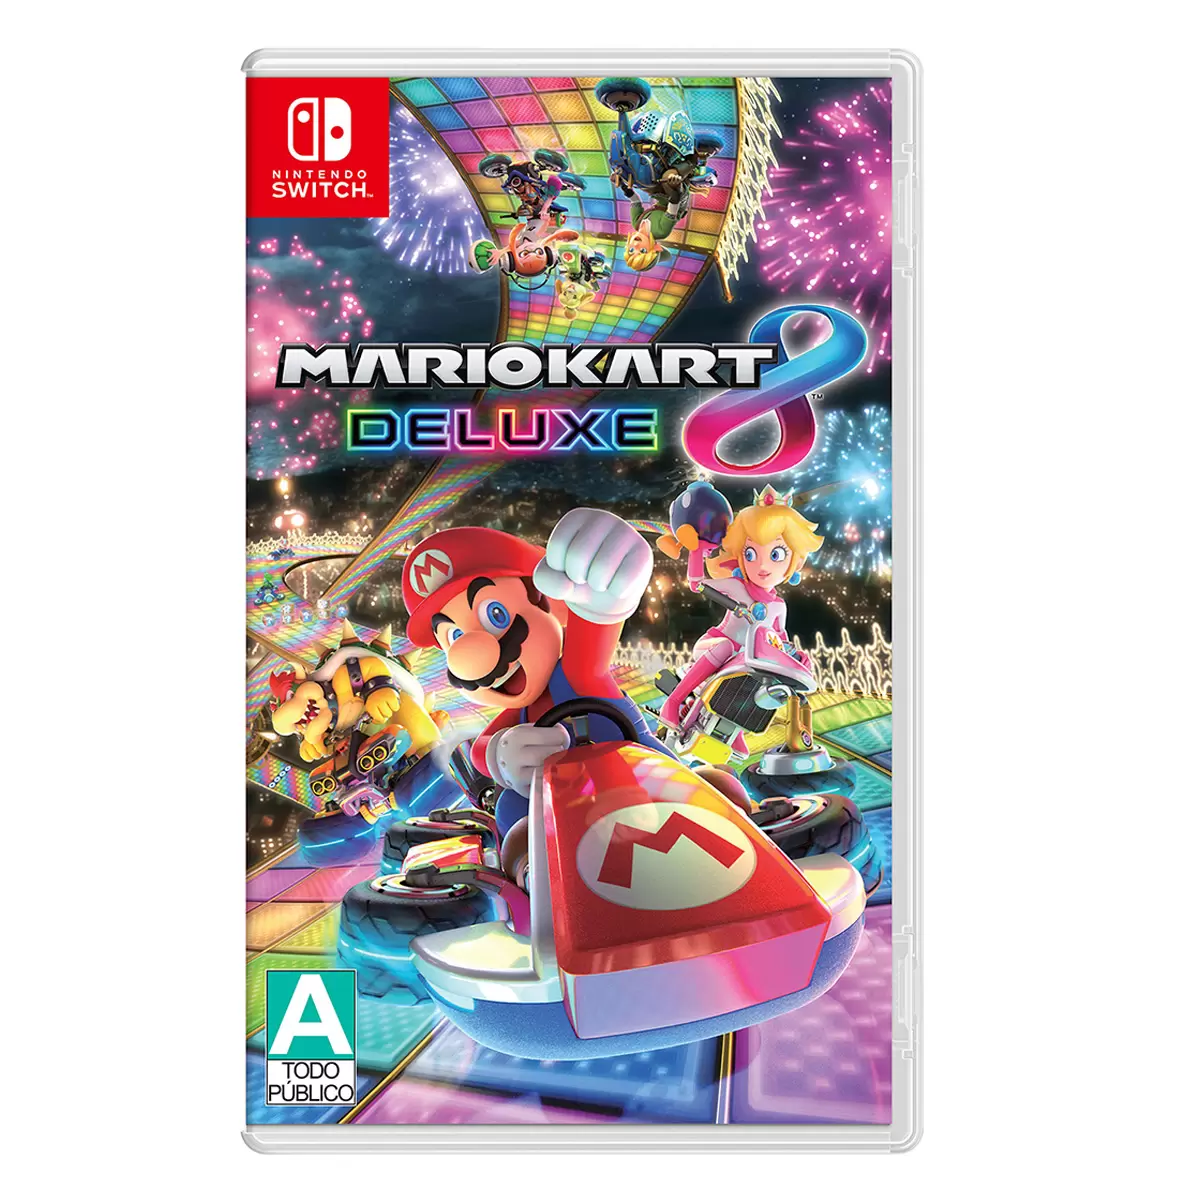 Nintendo Switch Juego Mario Kart 8 Deluxe